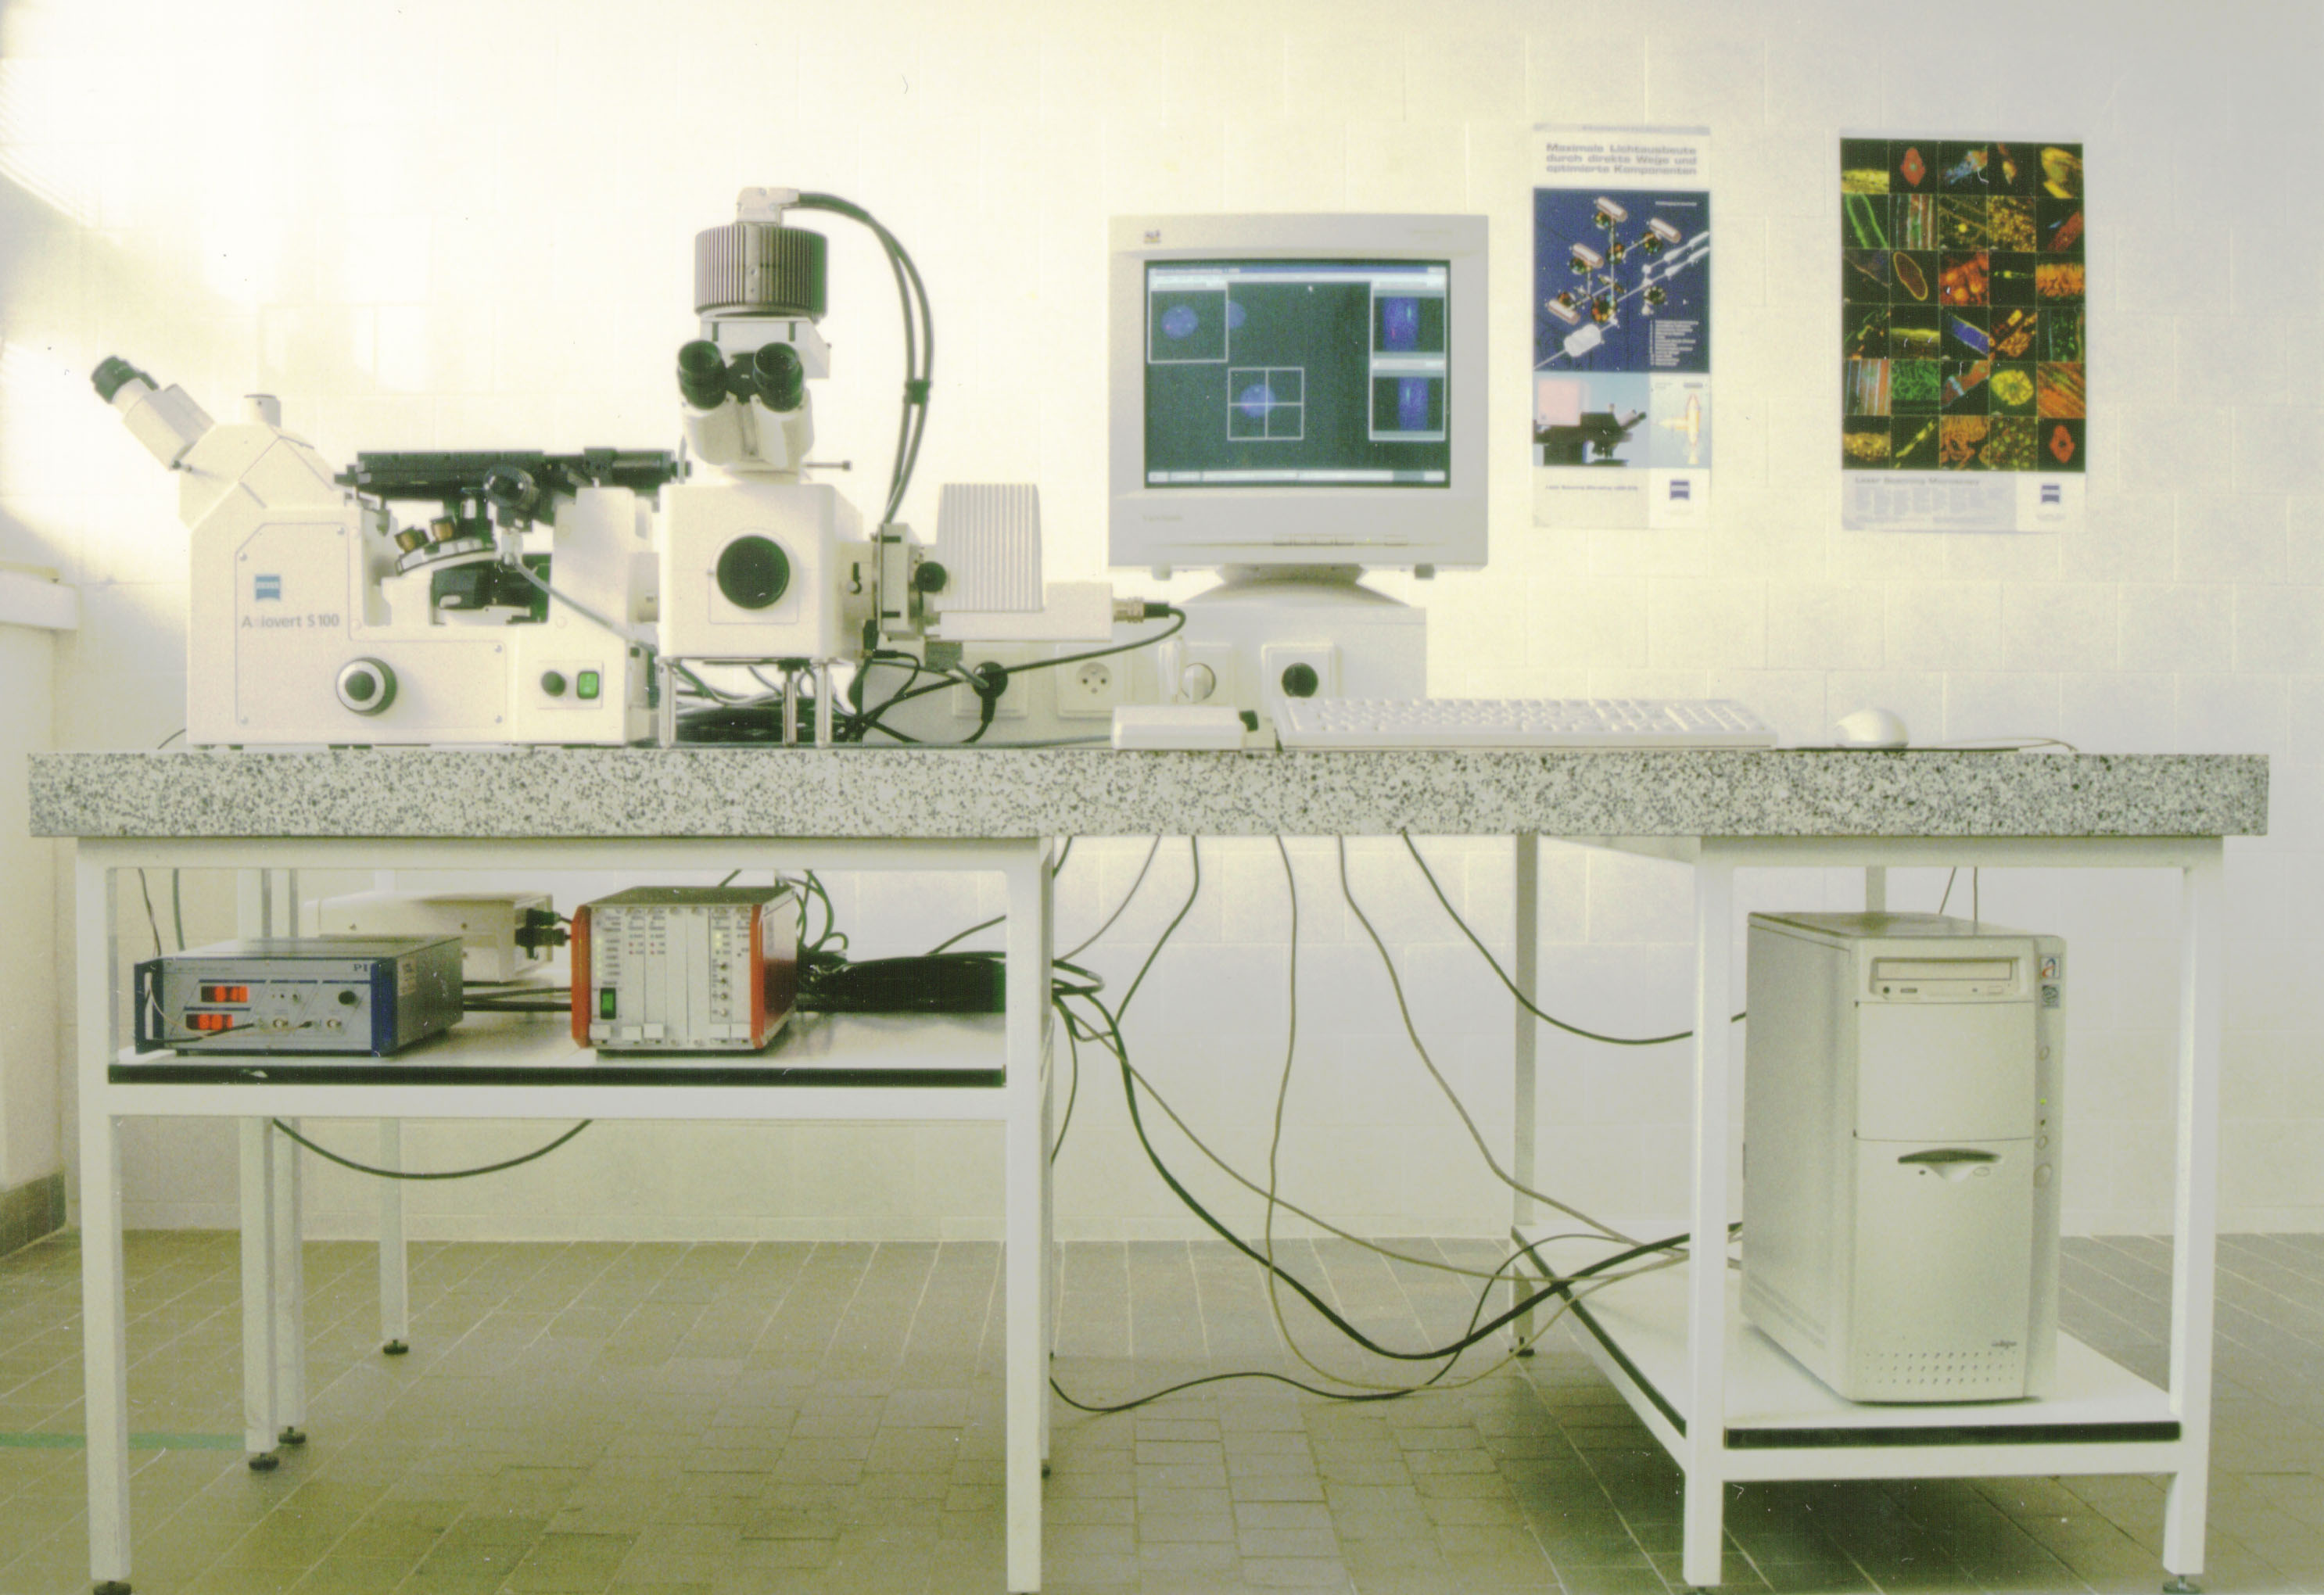 Brno microscope from 1990s